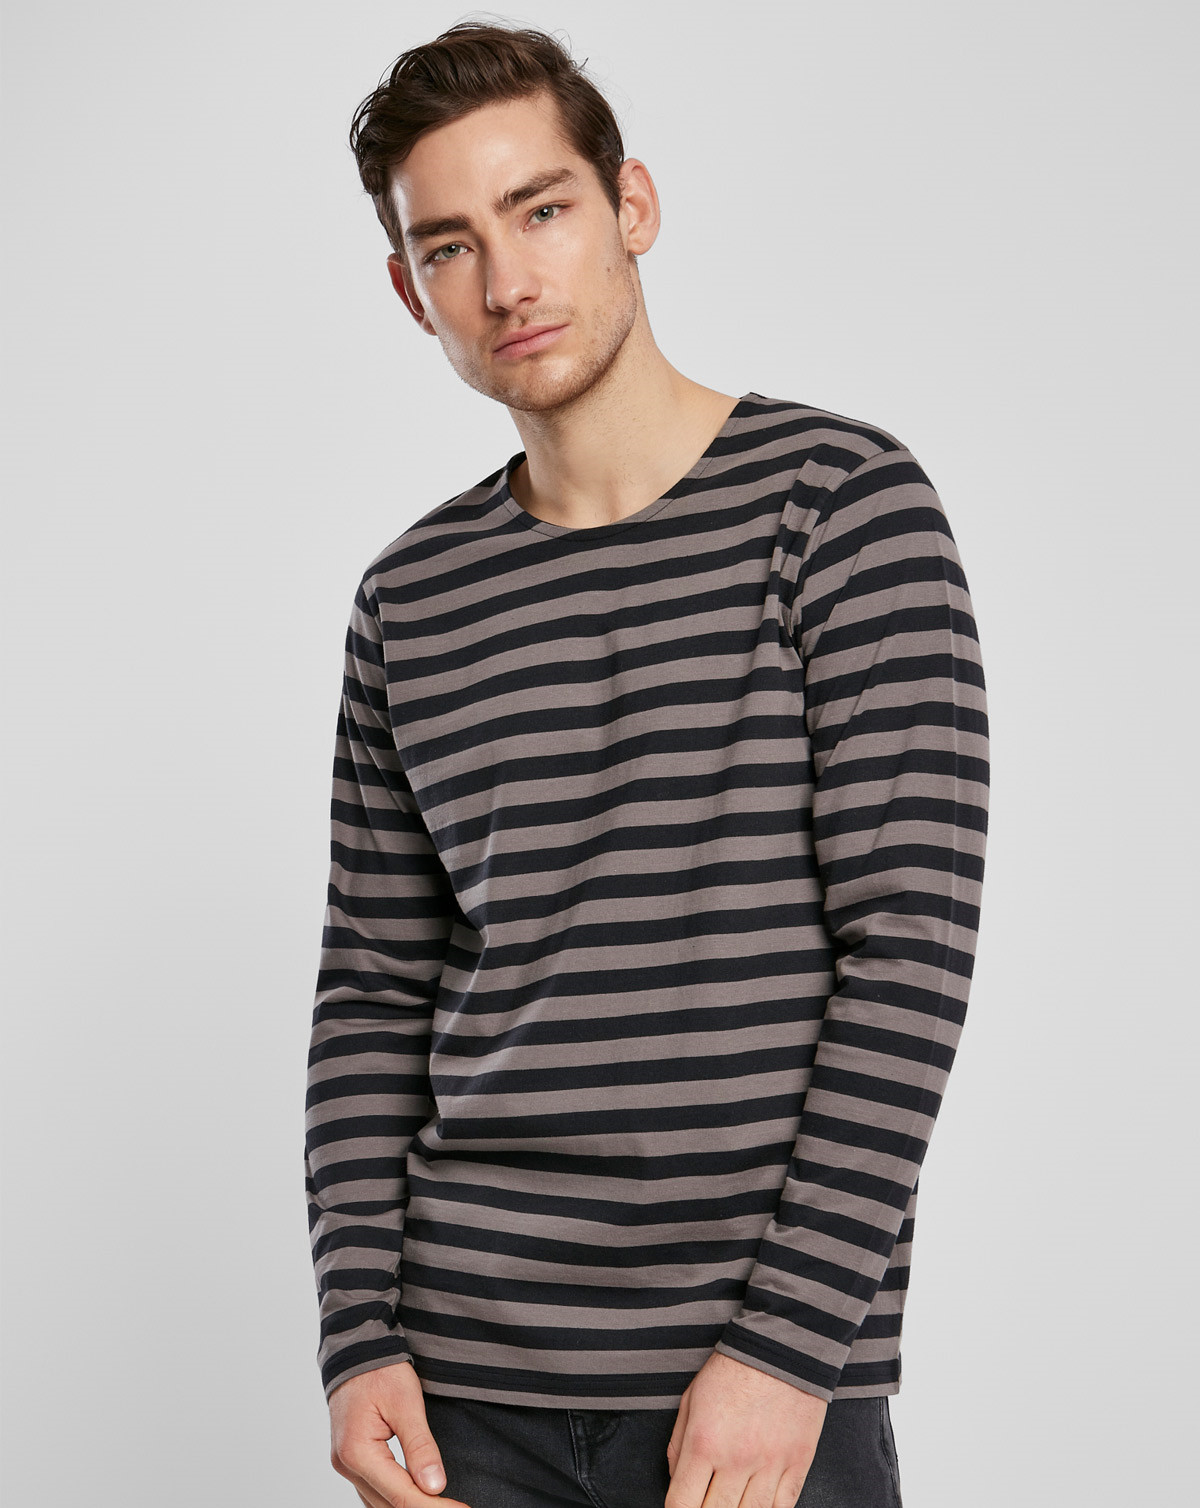 #2 - Urban Classics Regular StripeLong Sleeve T-Shirt (Asphalt / Black, 4XL)